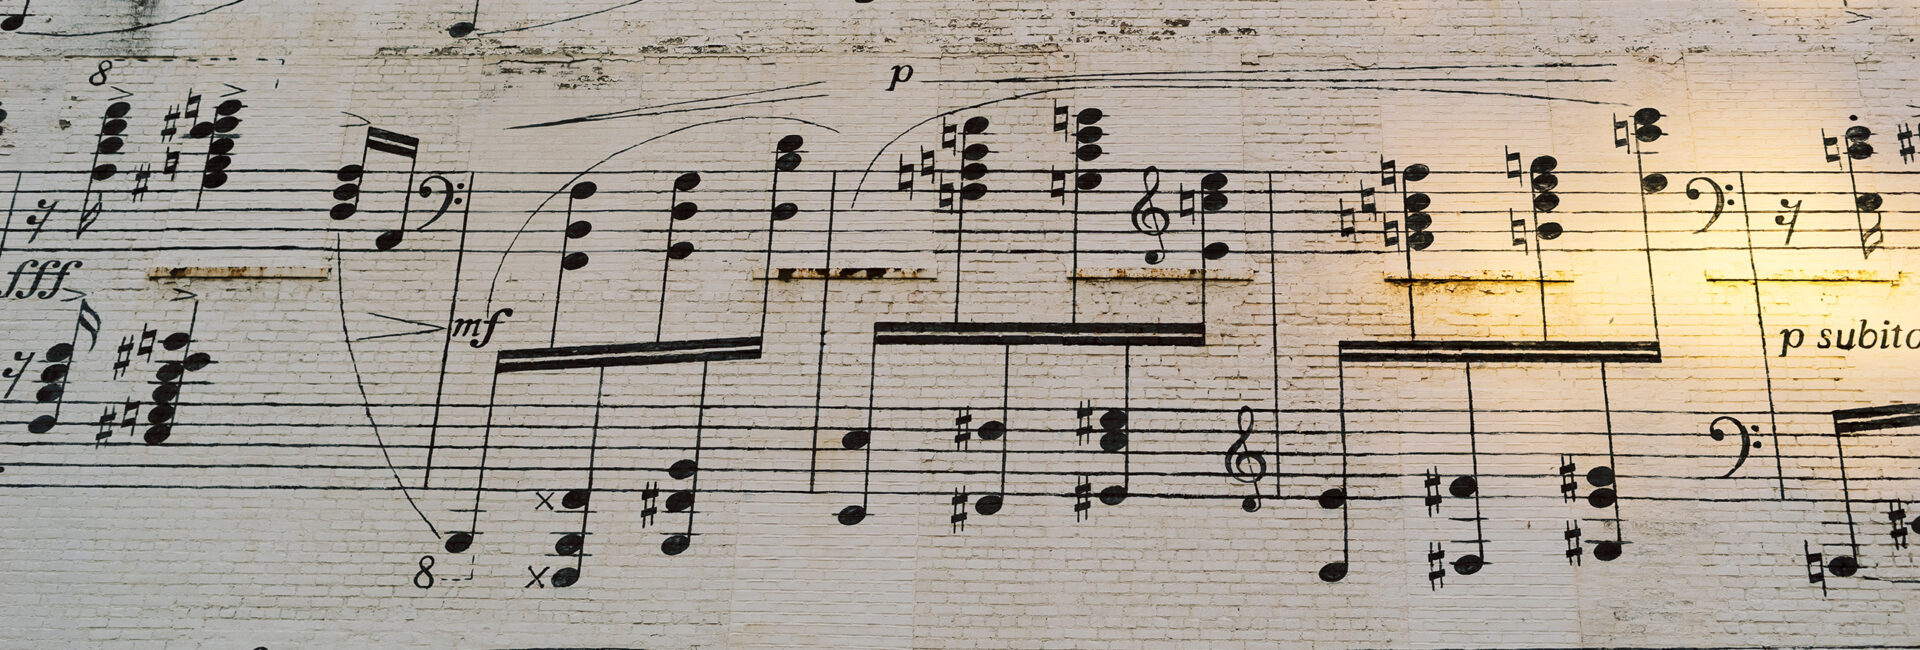 music-notation-wall